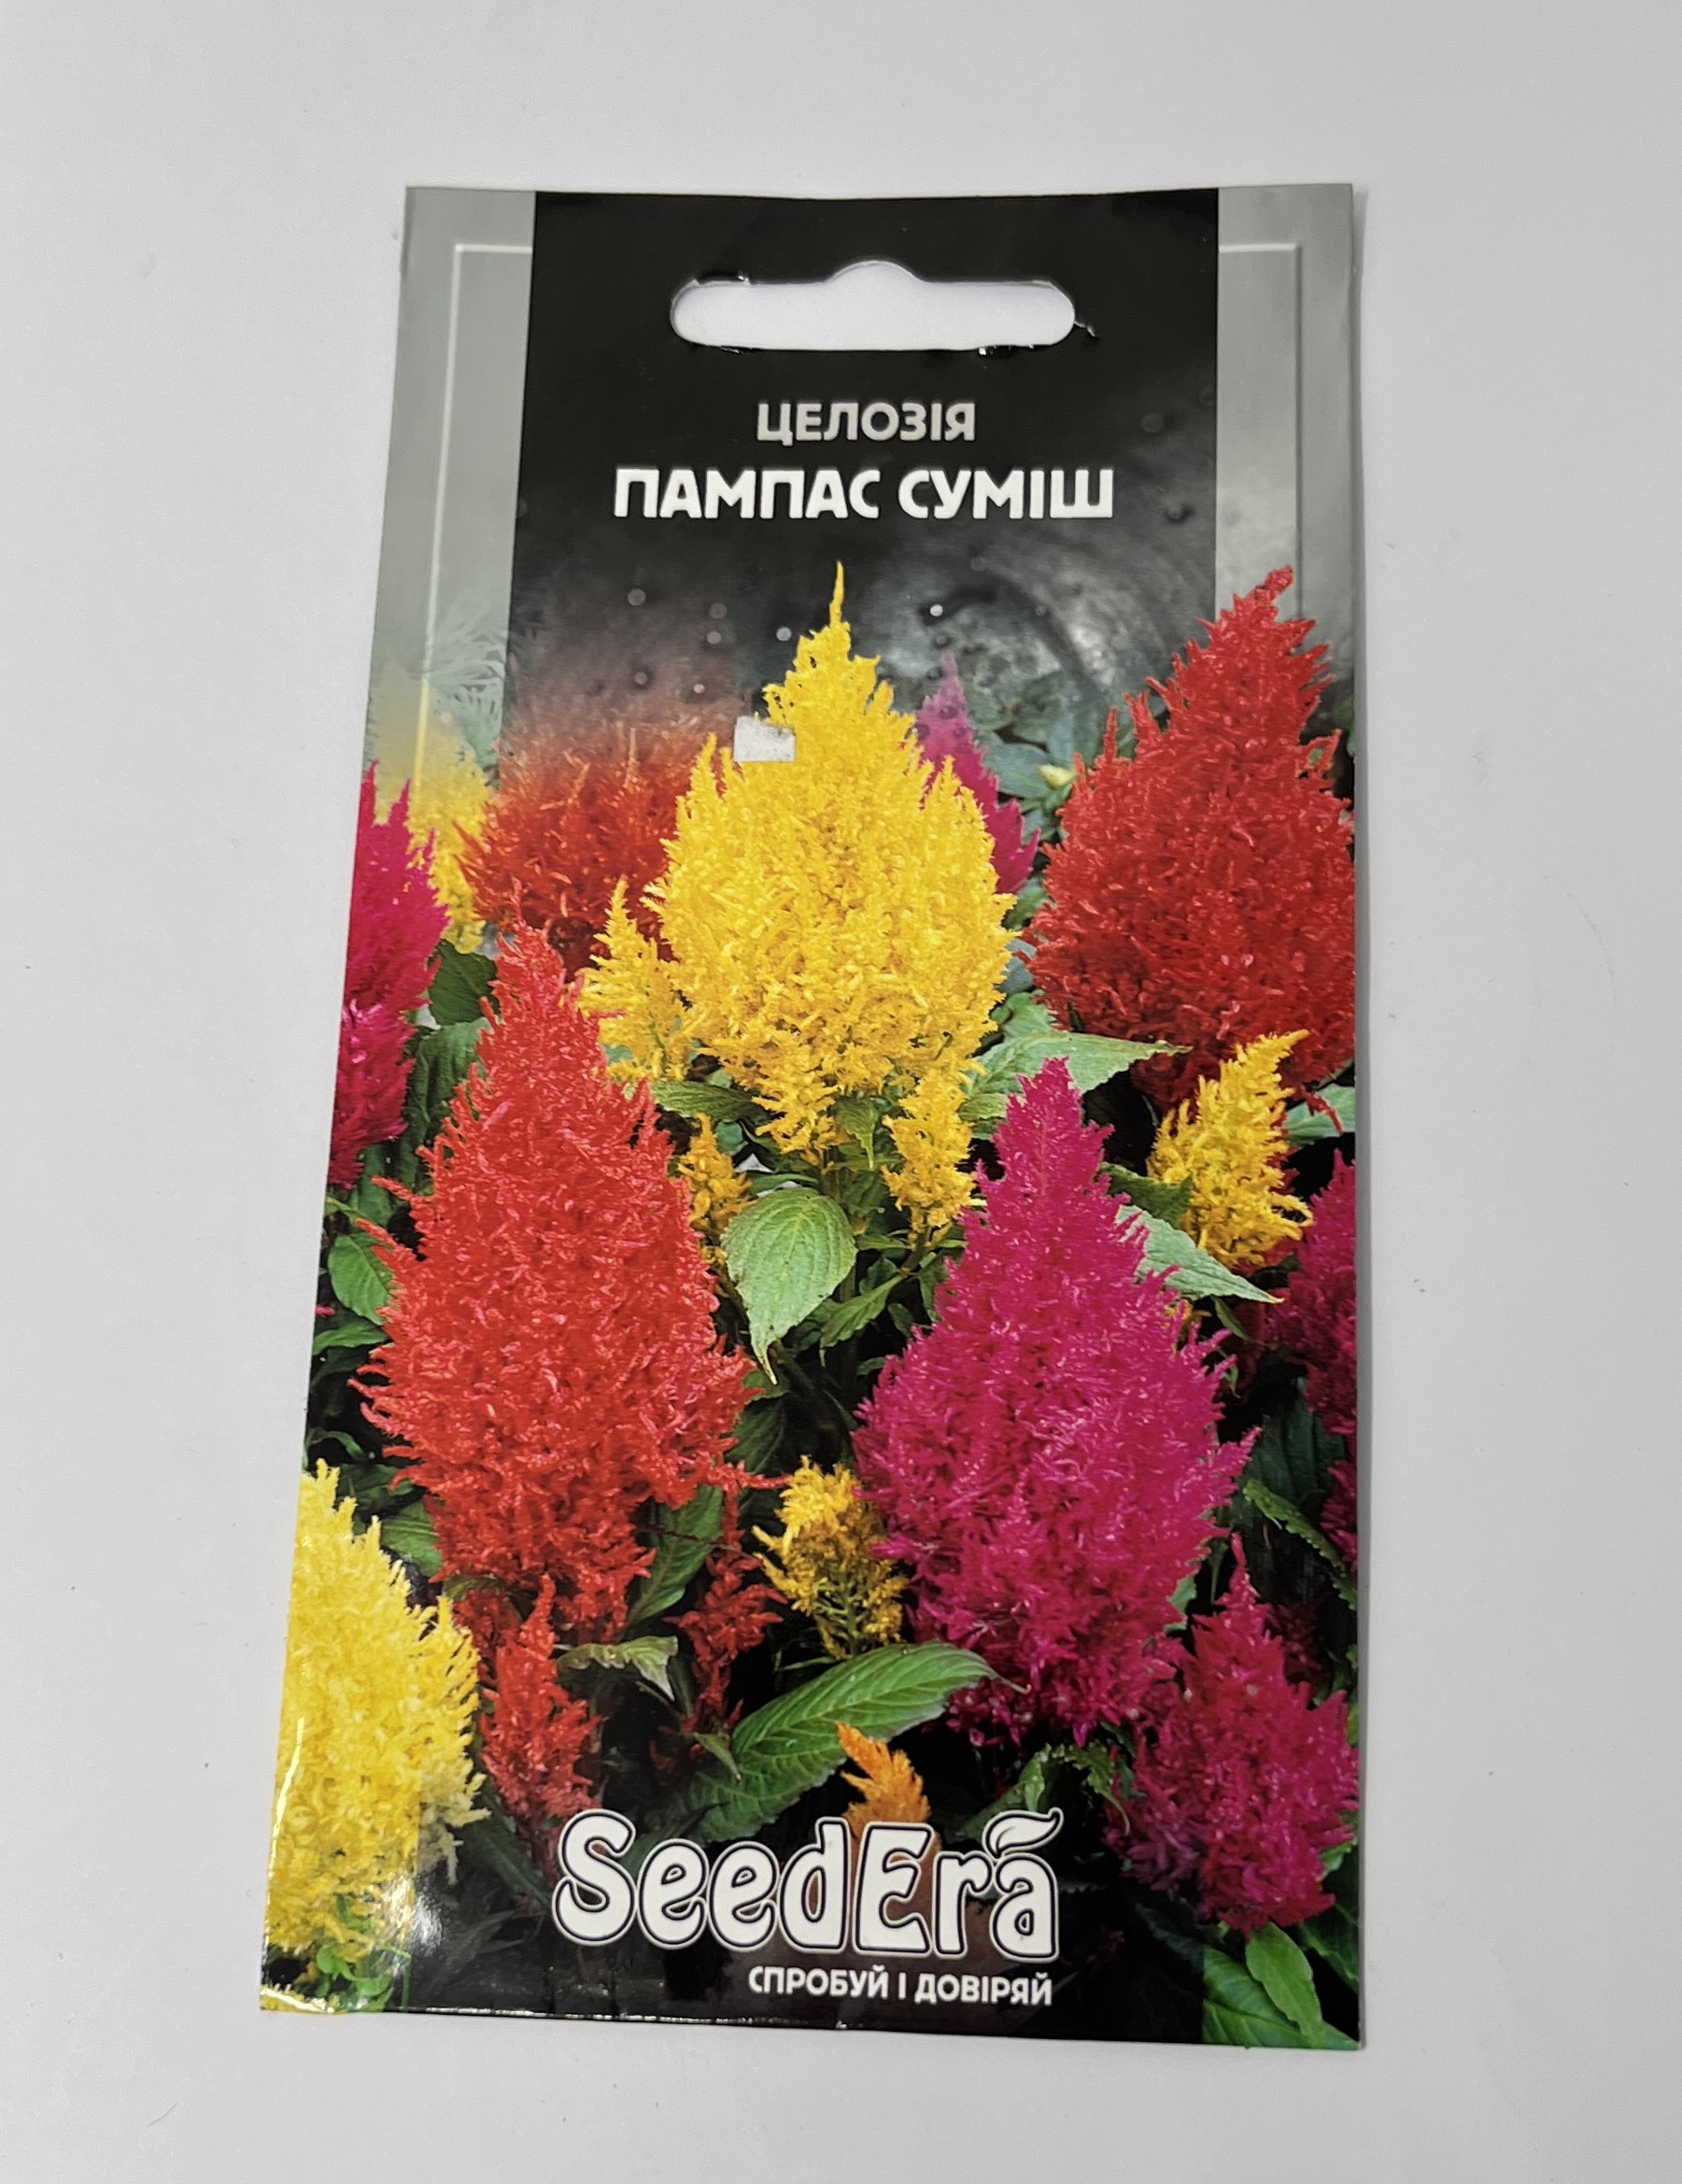 Celosia seeds "Pampas"